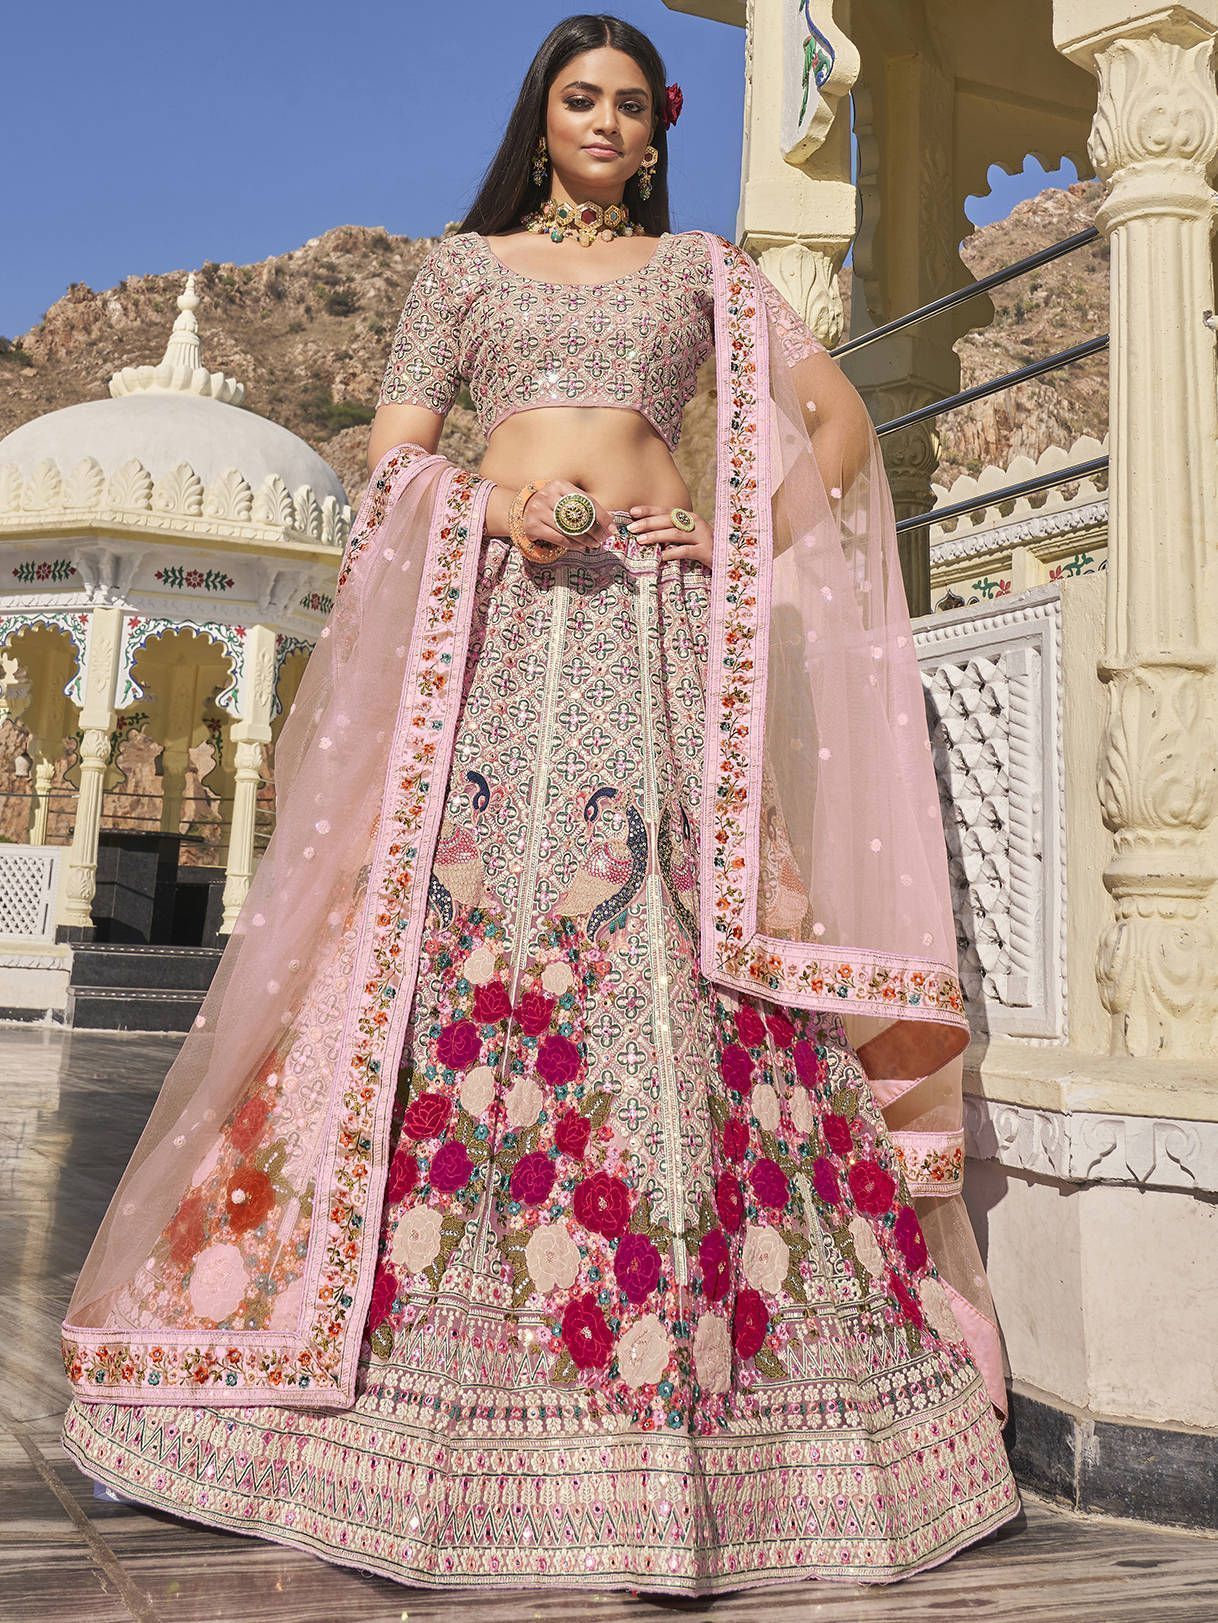 Astonishing Pink Multi-thread Work Net Wedding Lehenga Choli